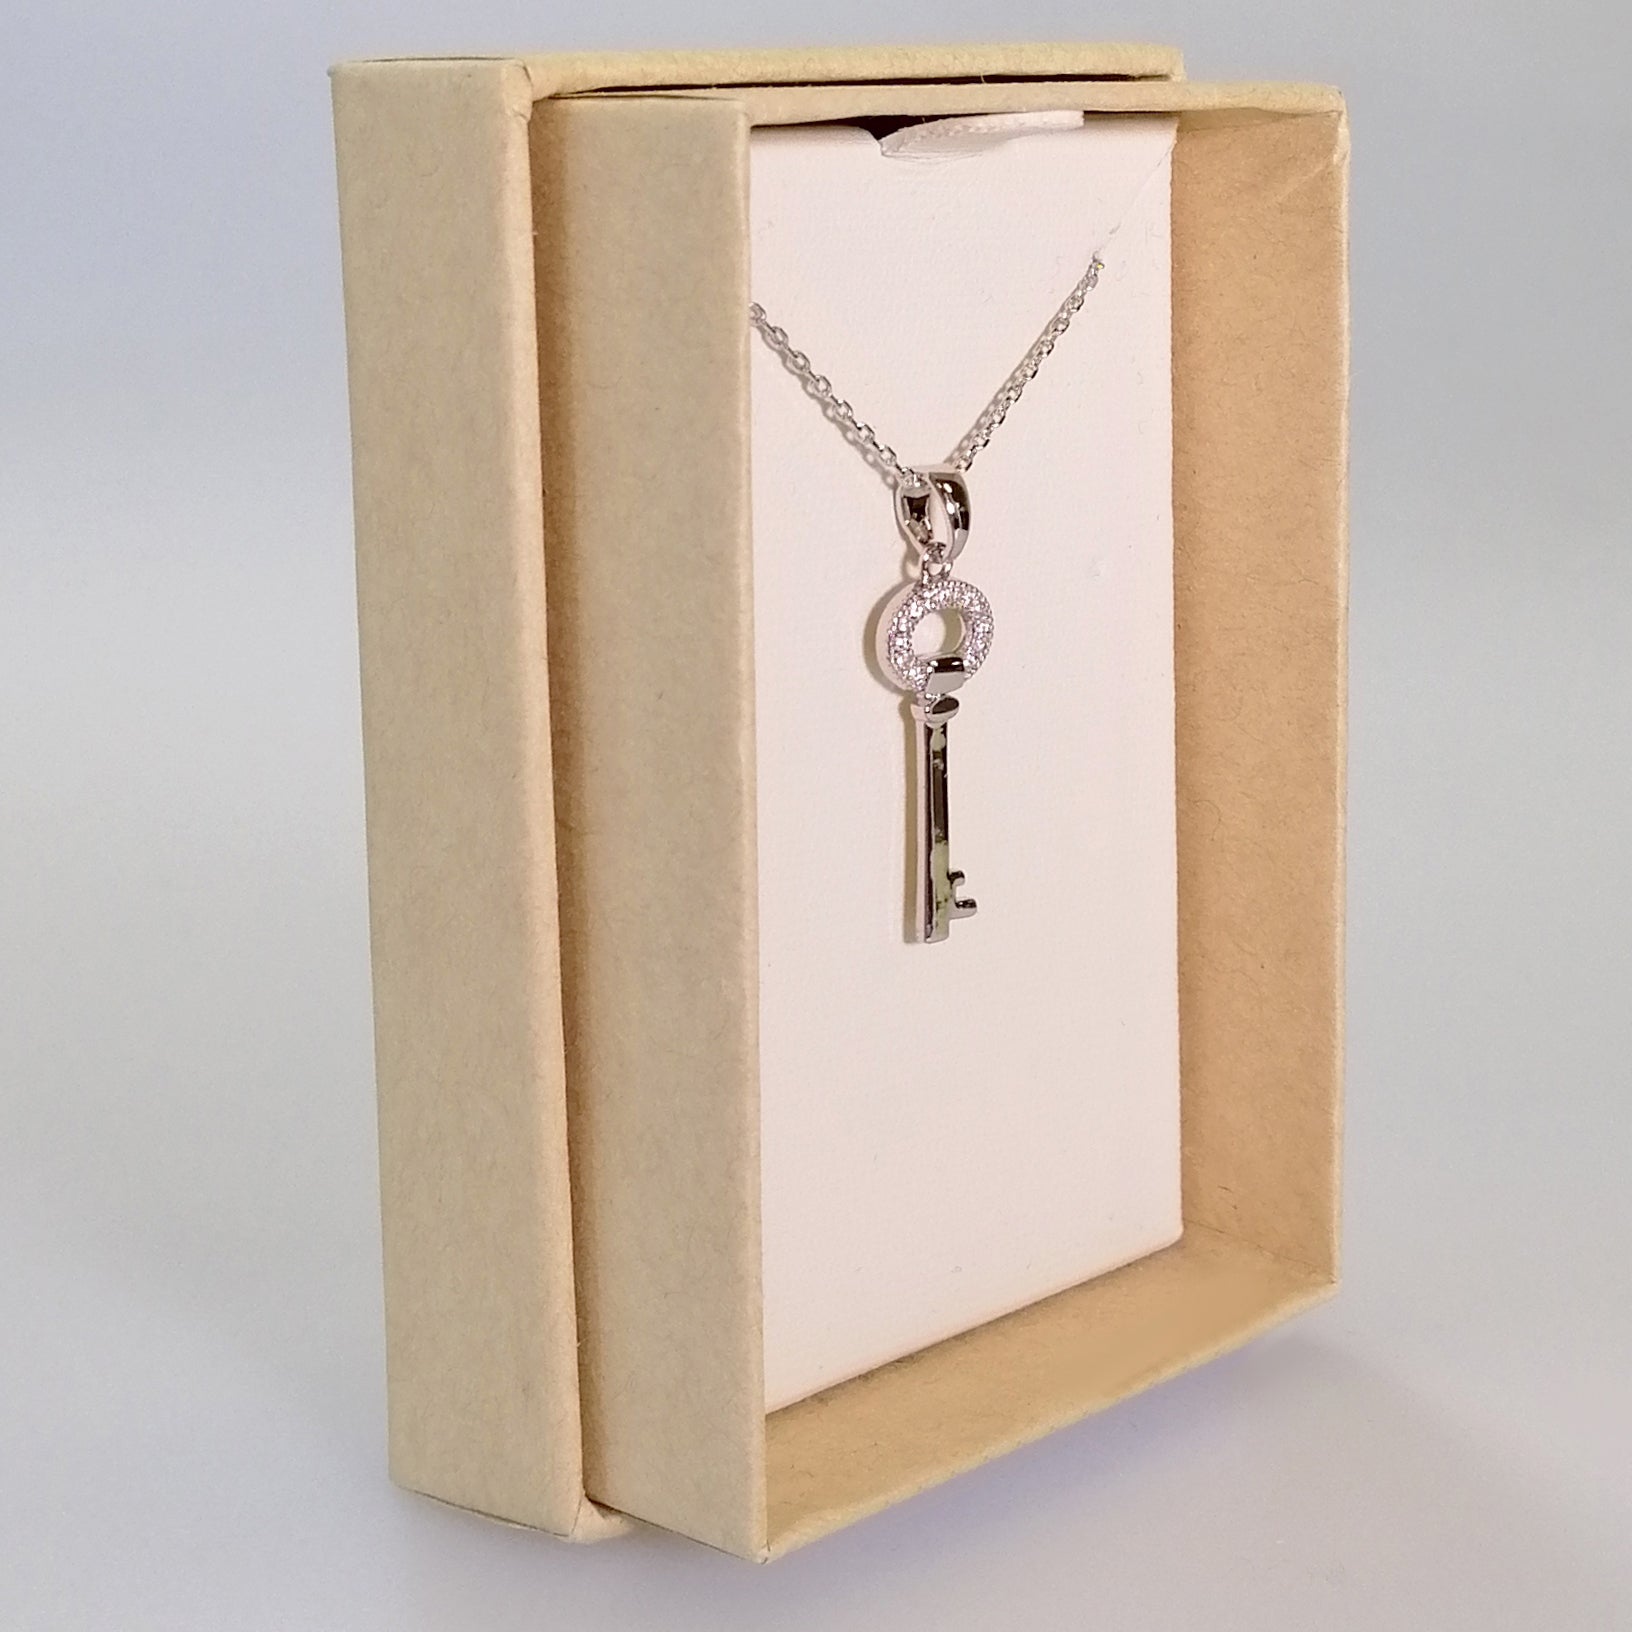 Kiwicraft - Silver-look Key Necklace